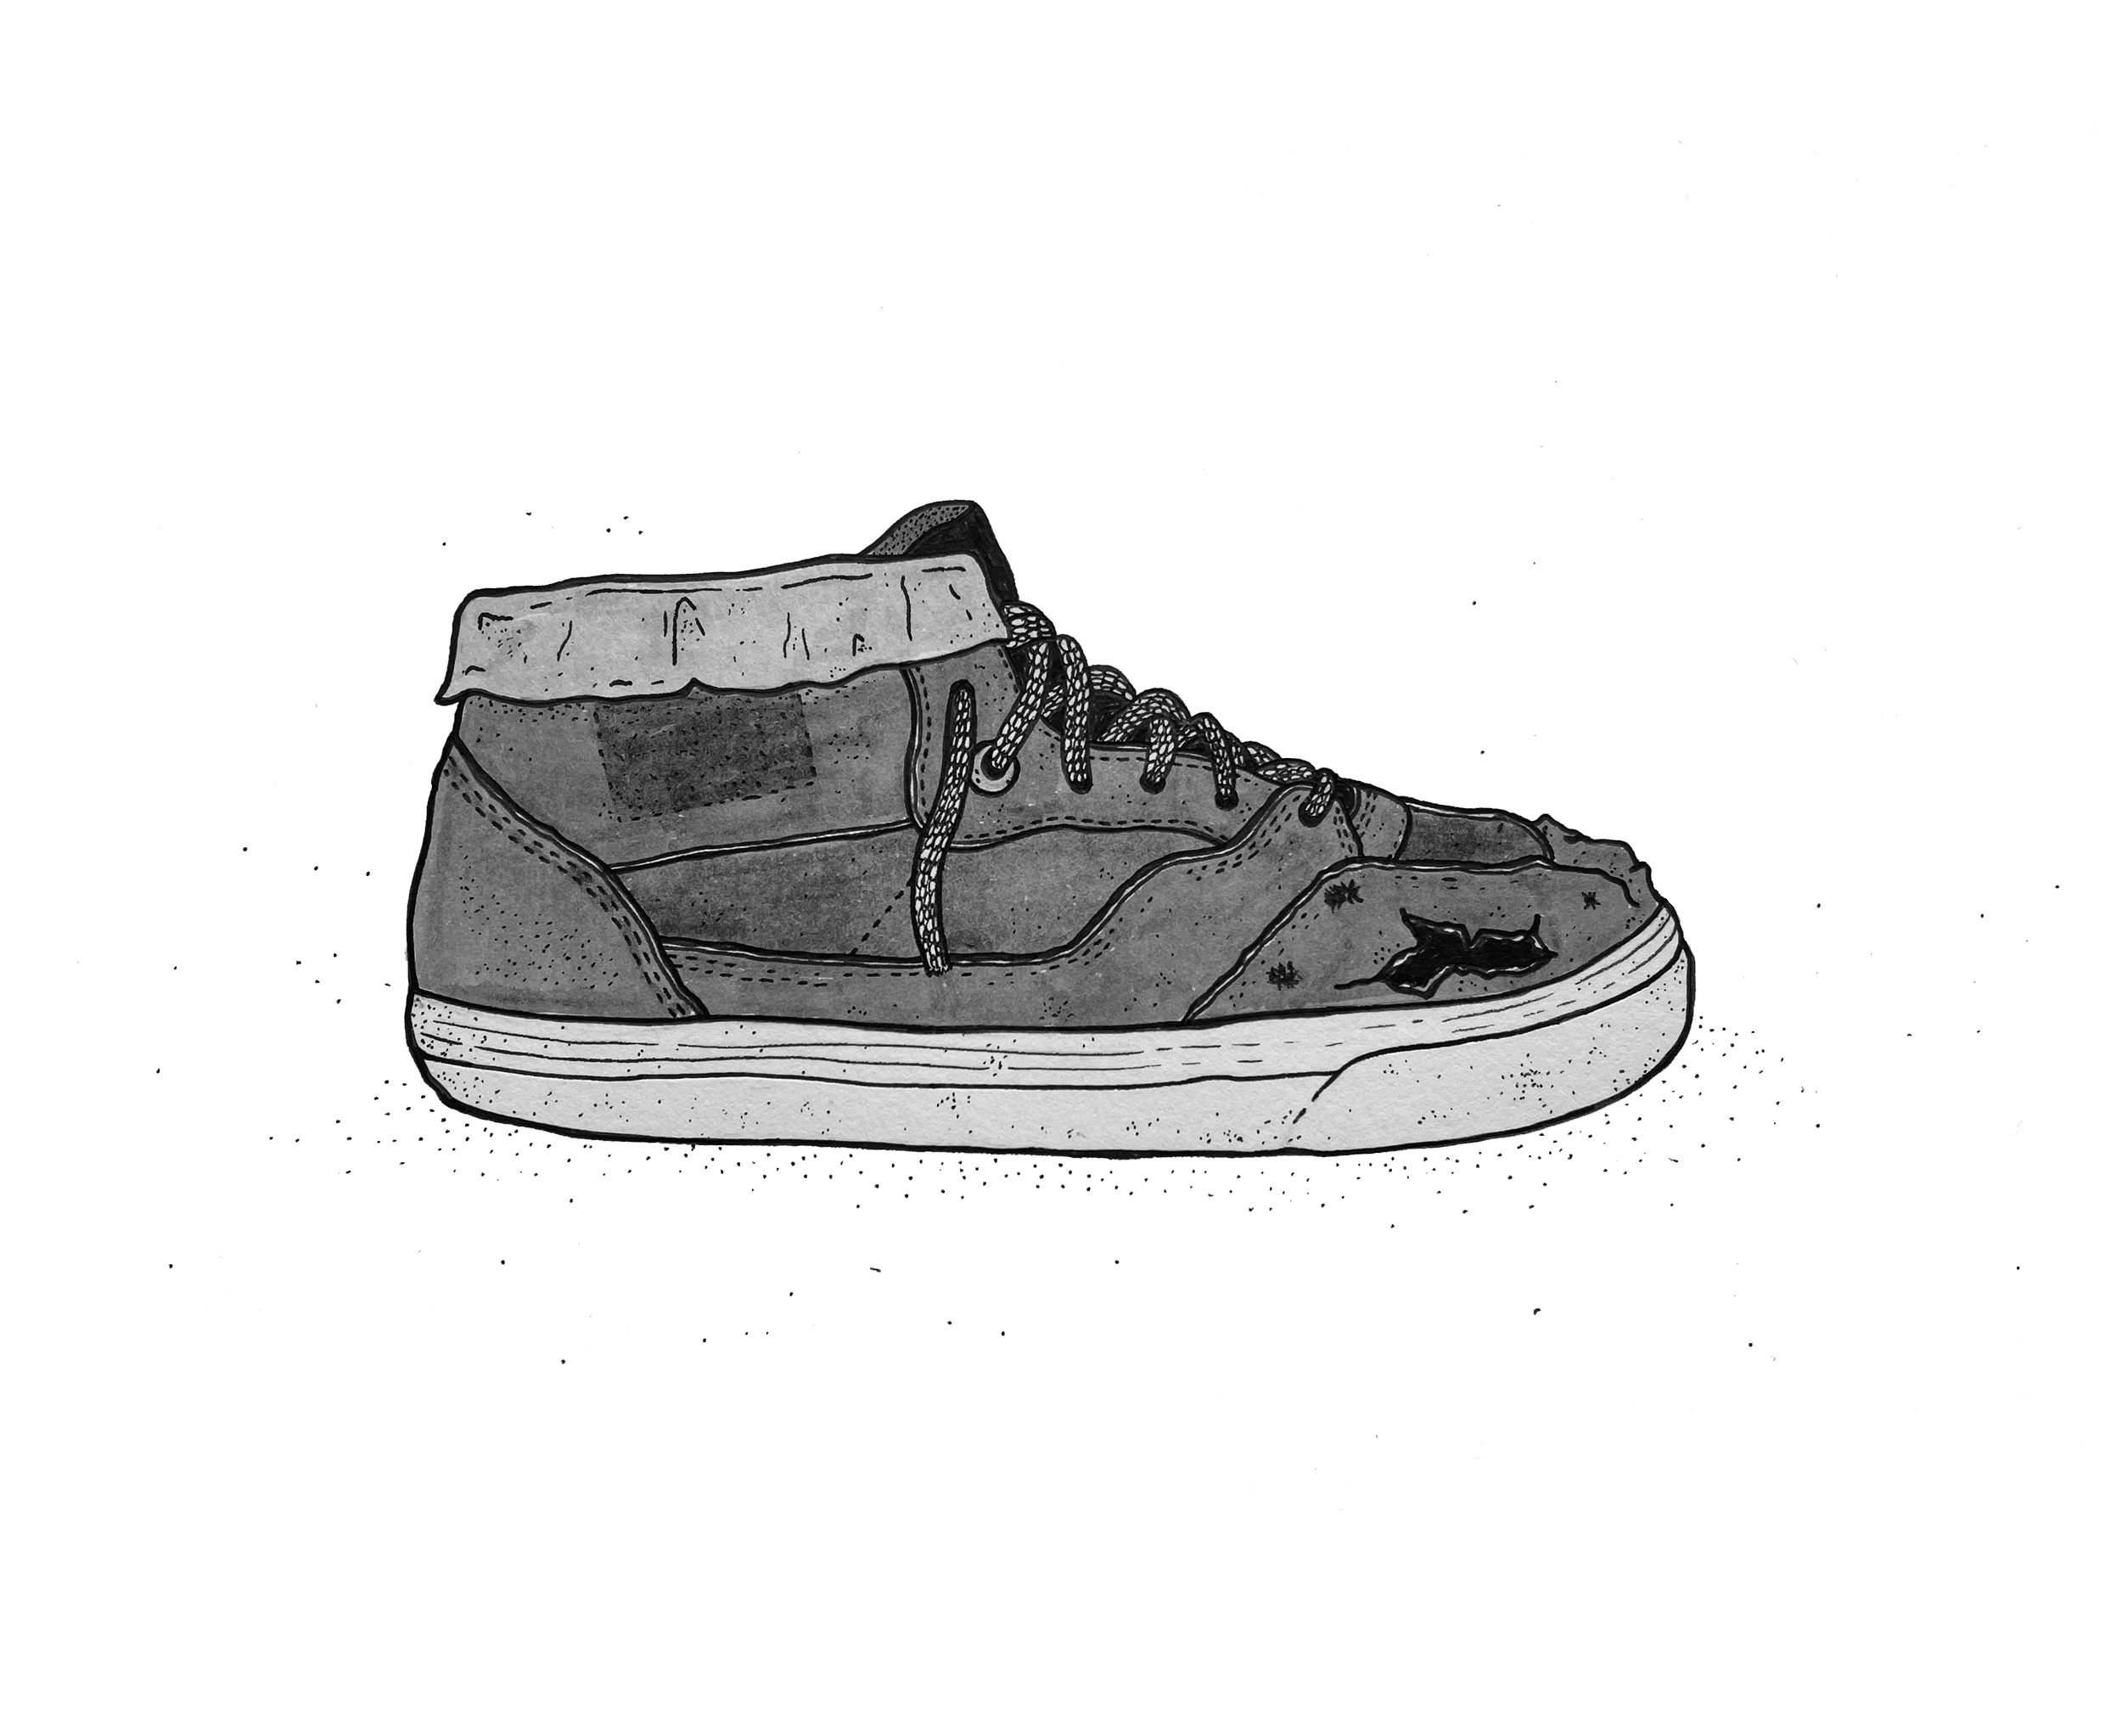 5. Osiris shoes from TK MAXX - Mum